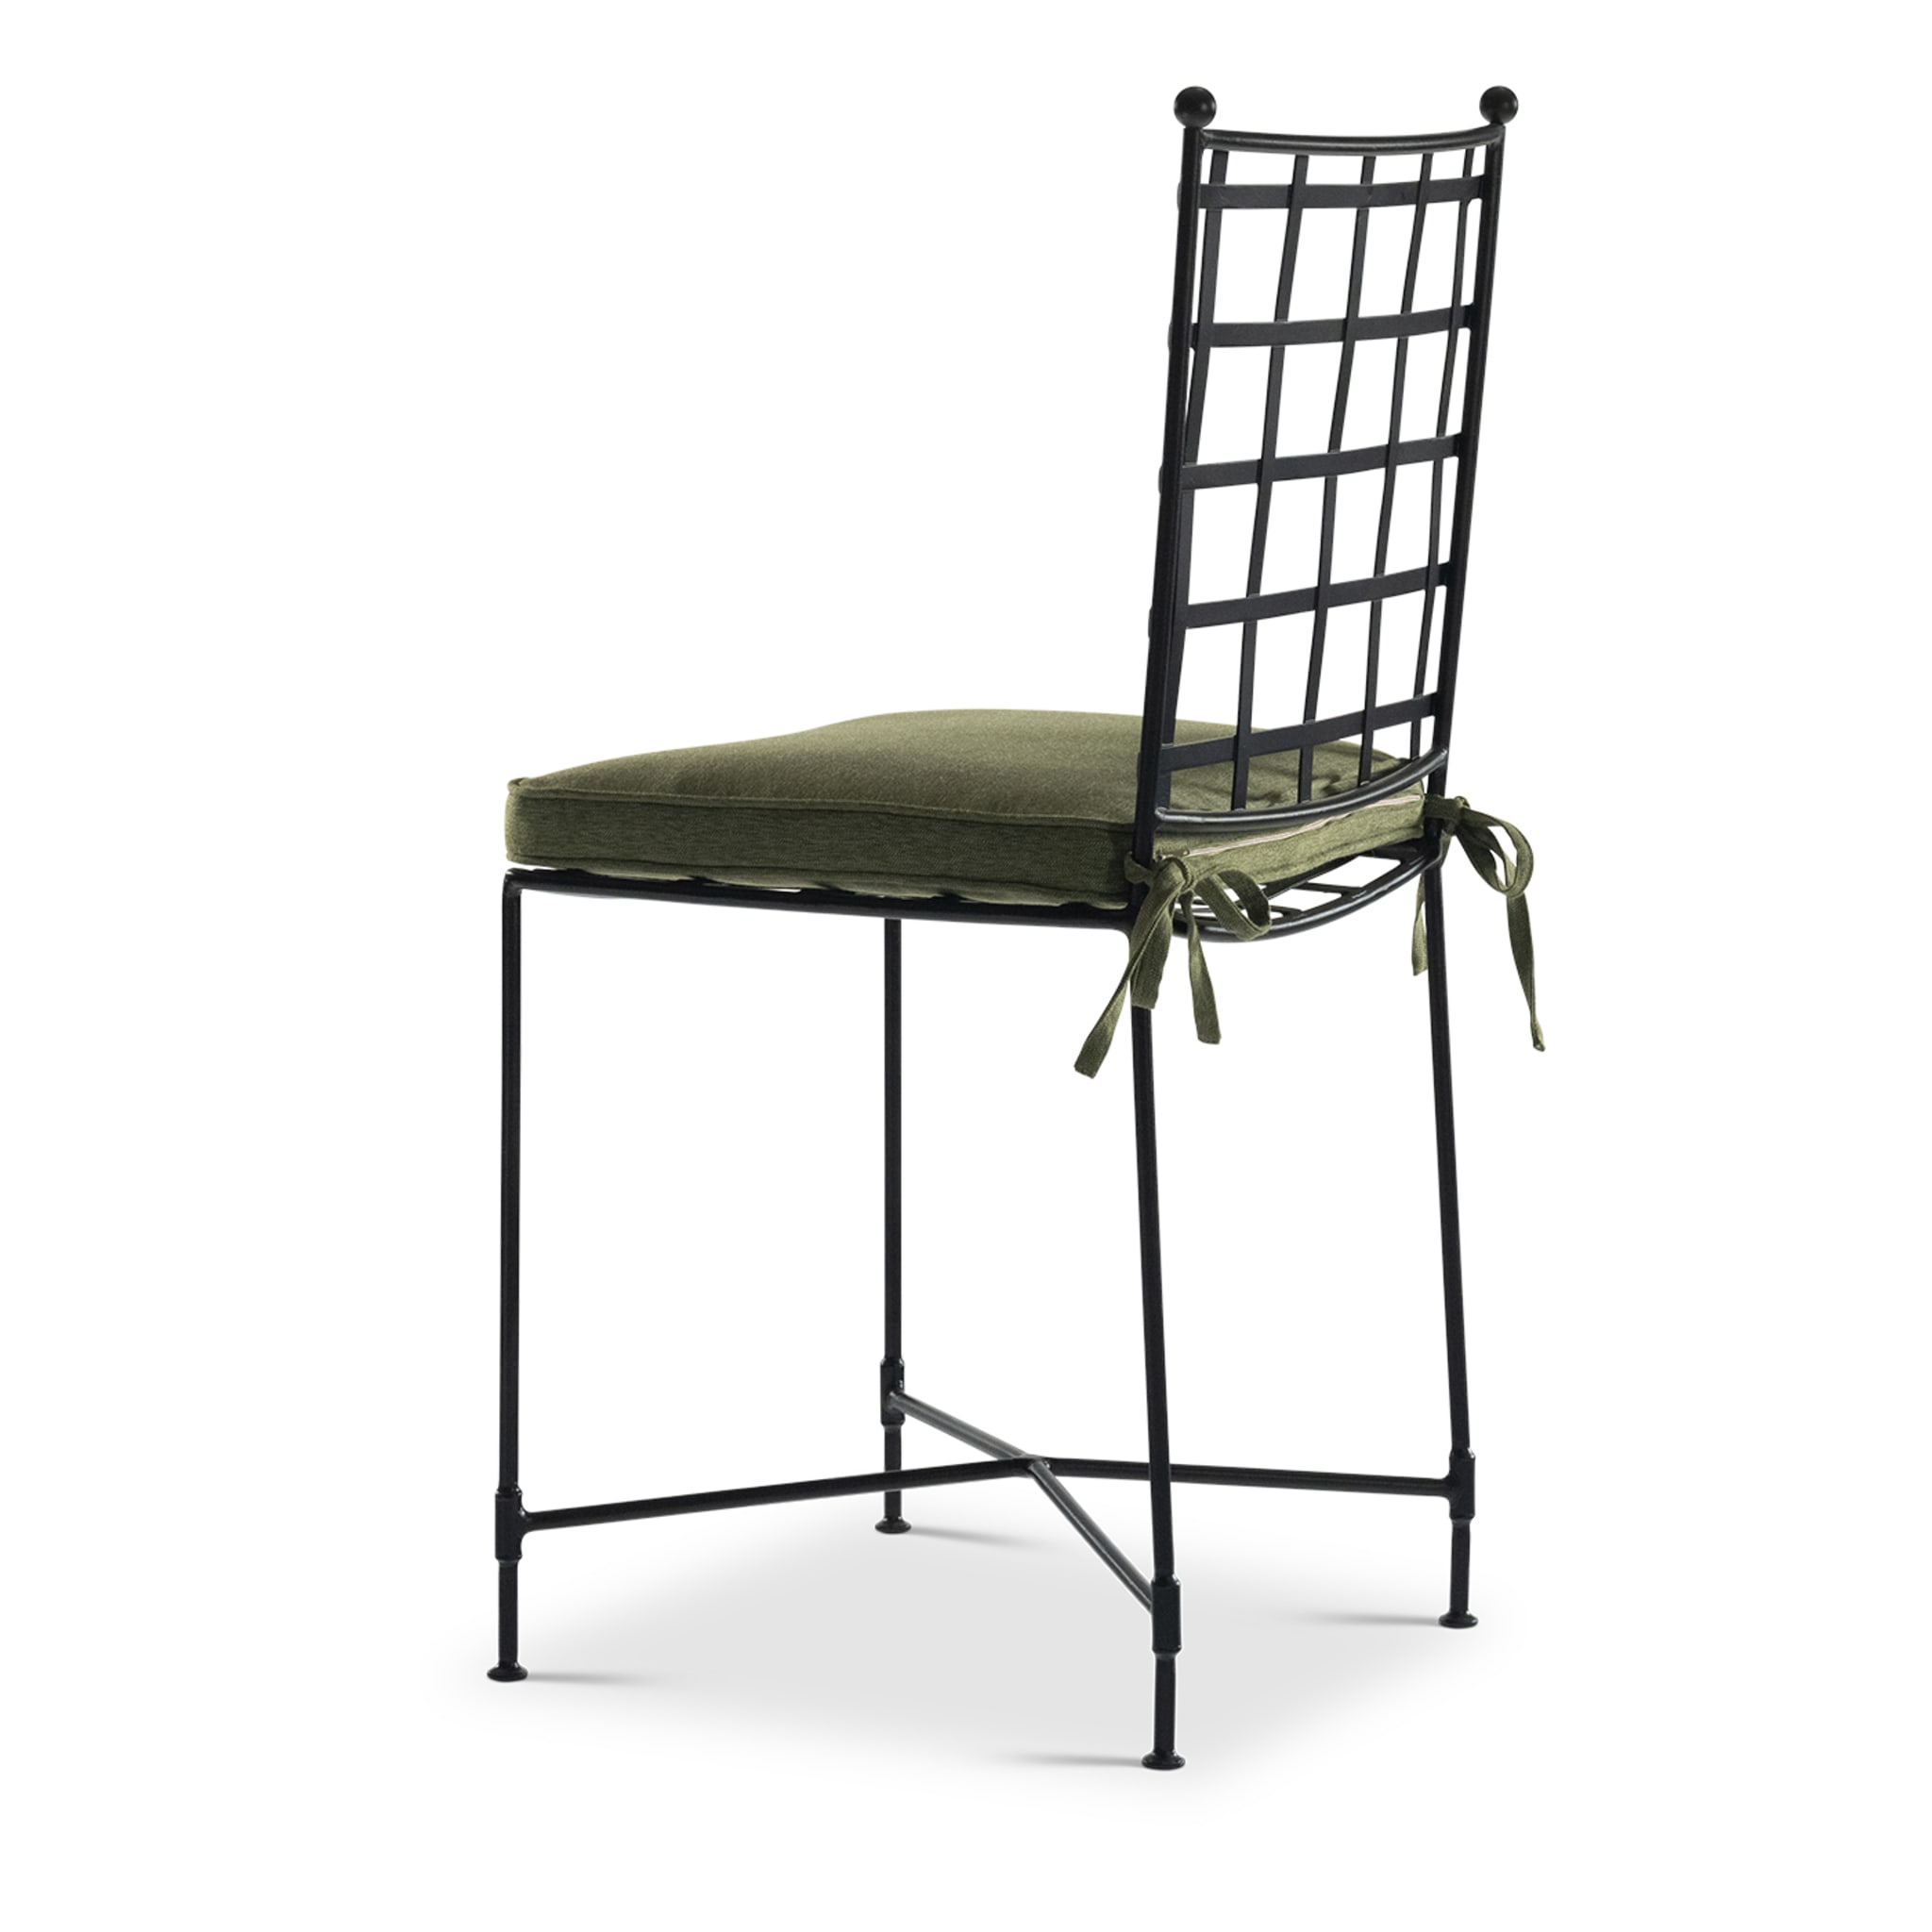 The Classic Green Garden Chair - Alternative view 2